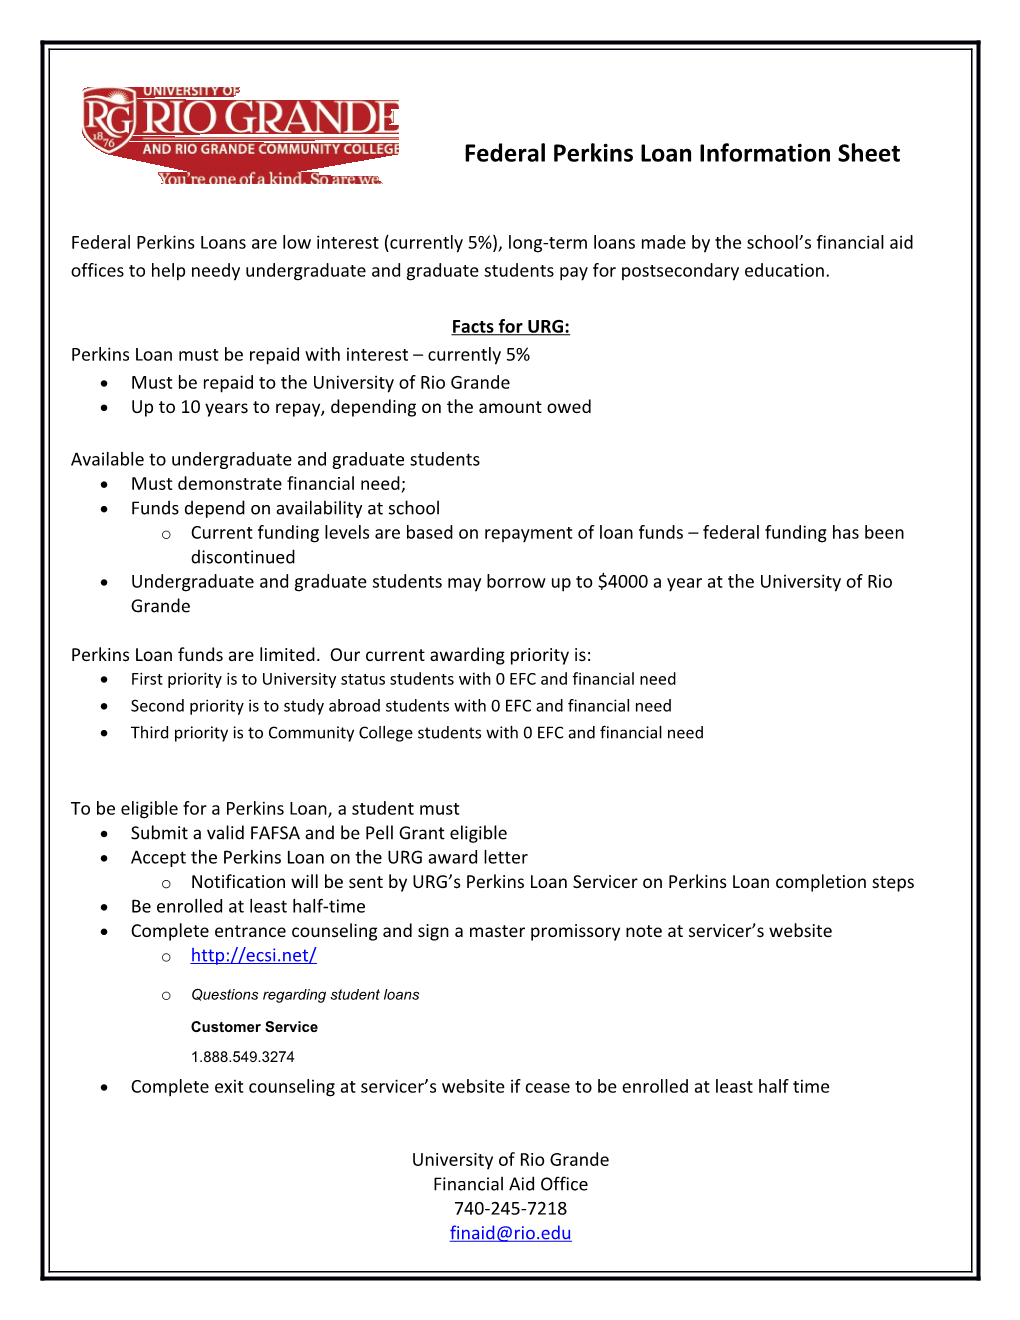 Federal Perkins Loan Information Sheet